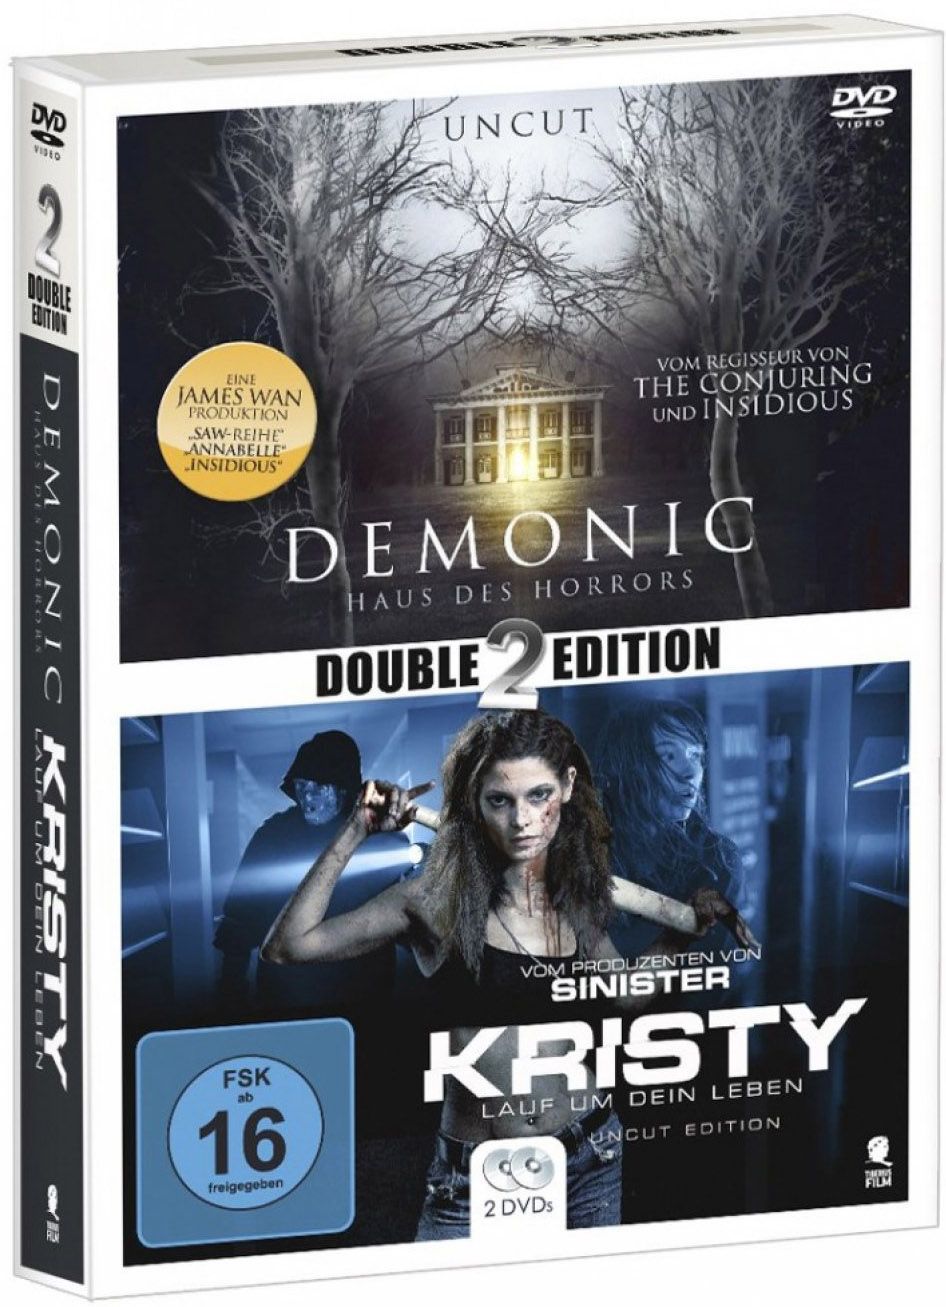 Demonic - Haus des Horrors / Kristy - Lauf um dein Leben (Double2Edition) (2 Discs)